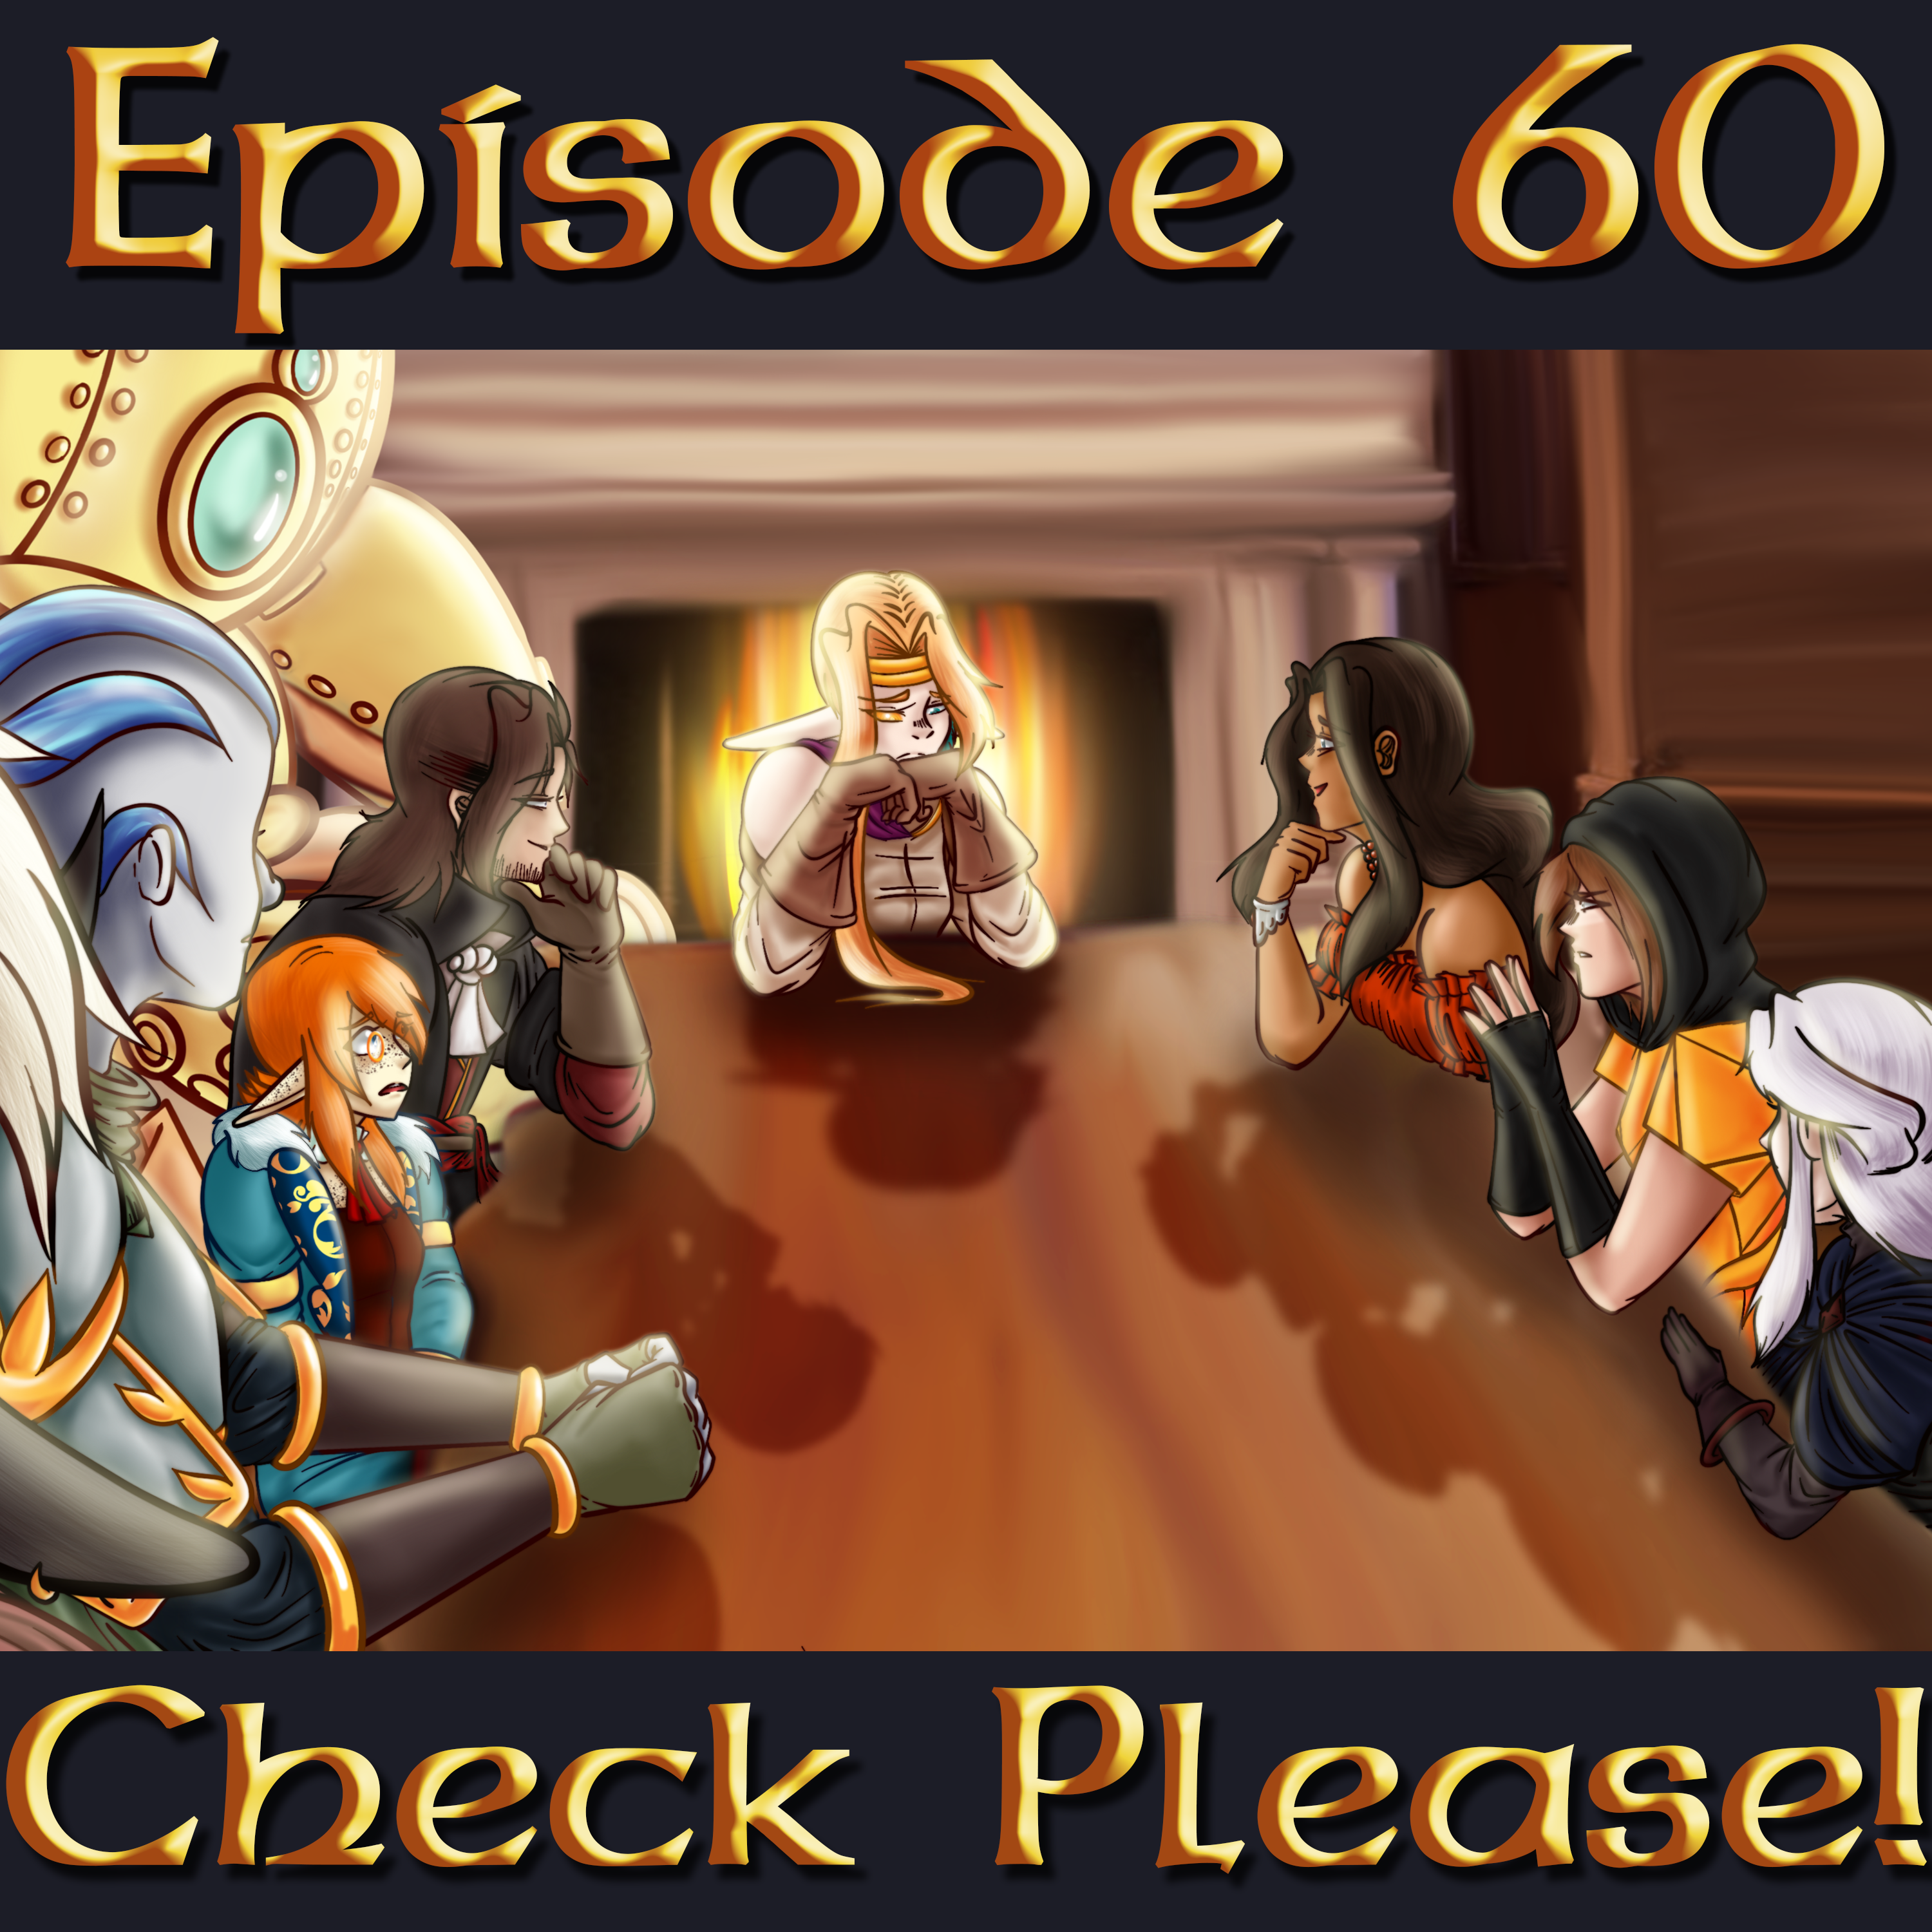 Check Please! S1 E60: The Council of Sol